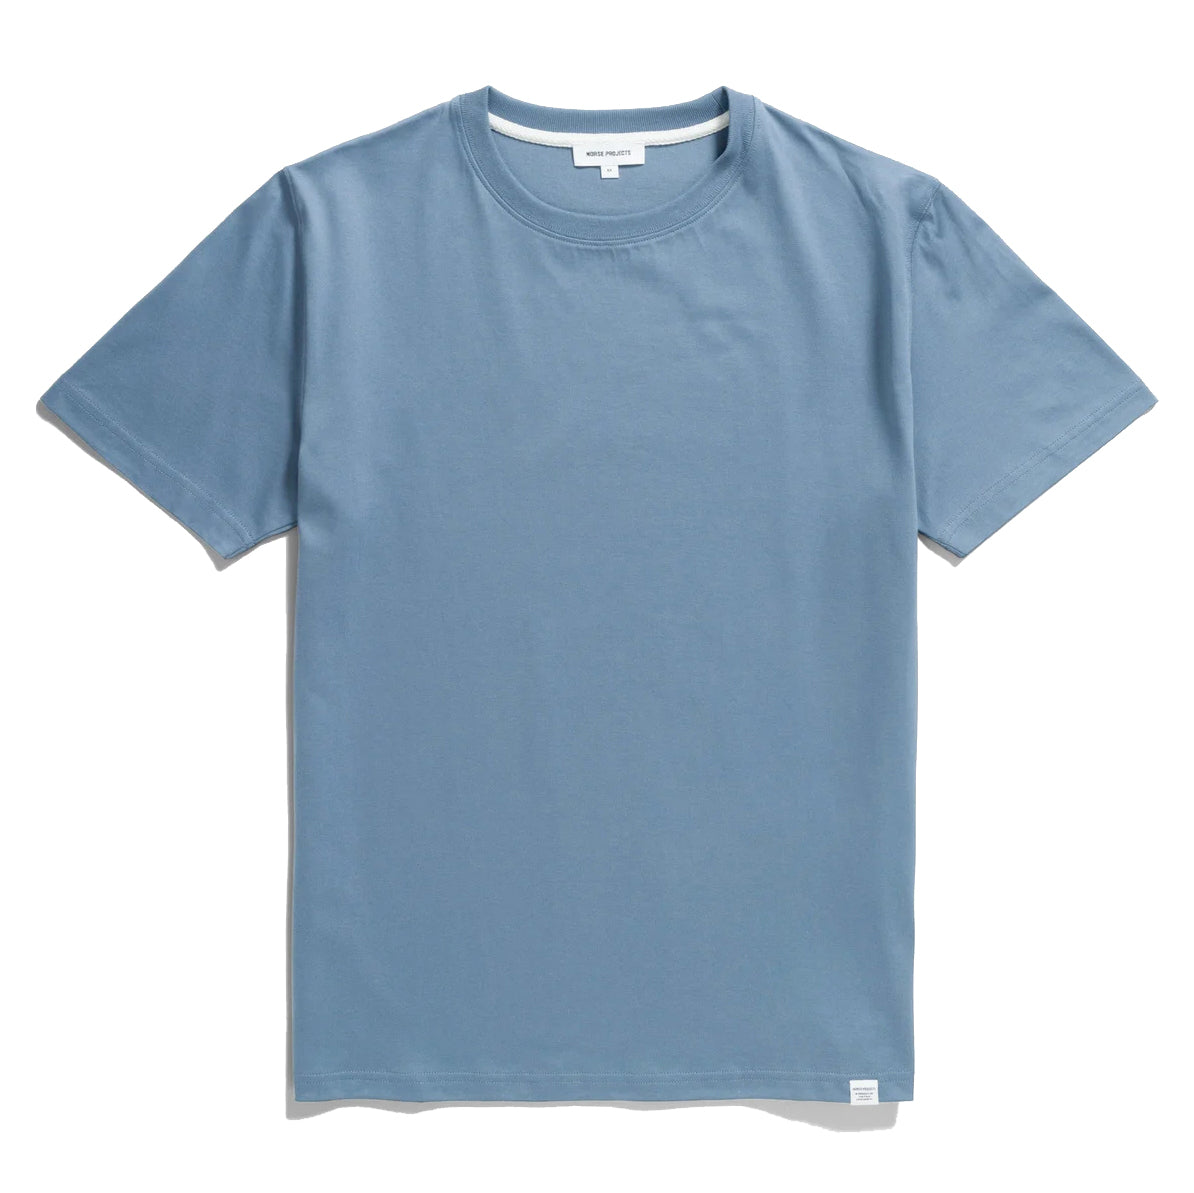 Niels Standard T-Shirt - Fog Blue